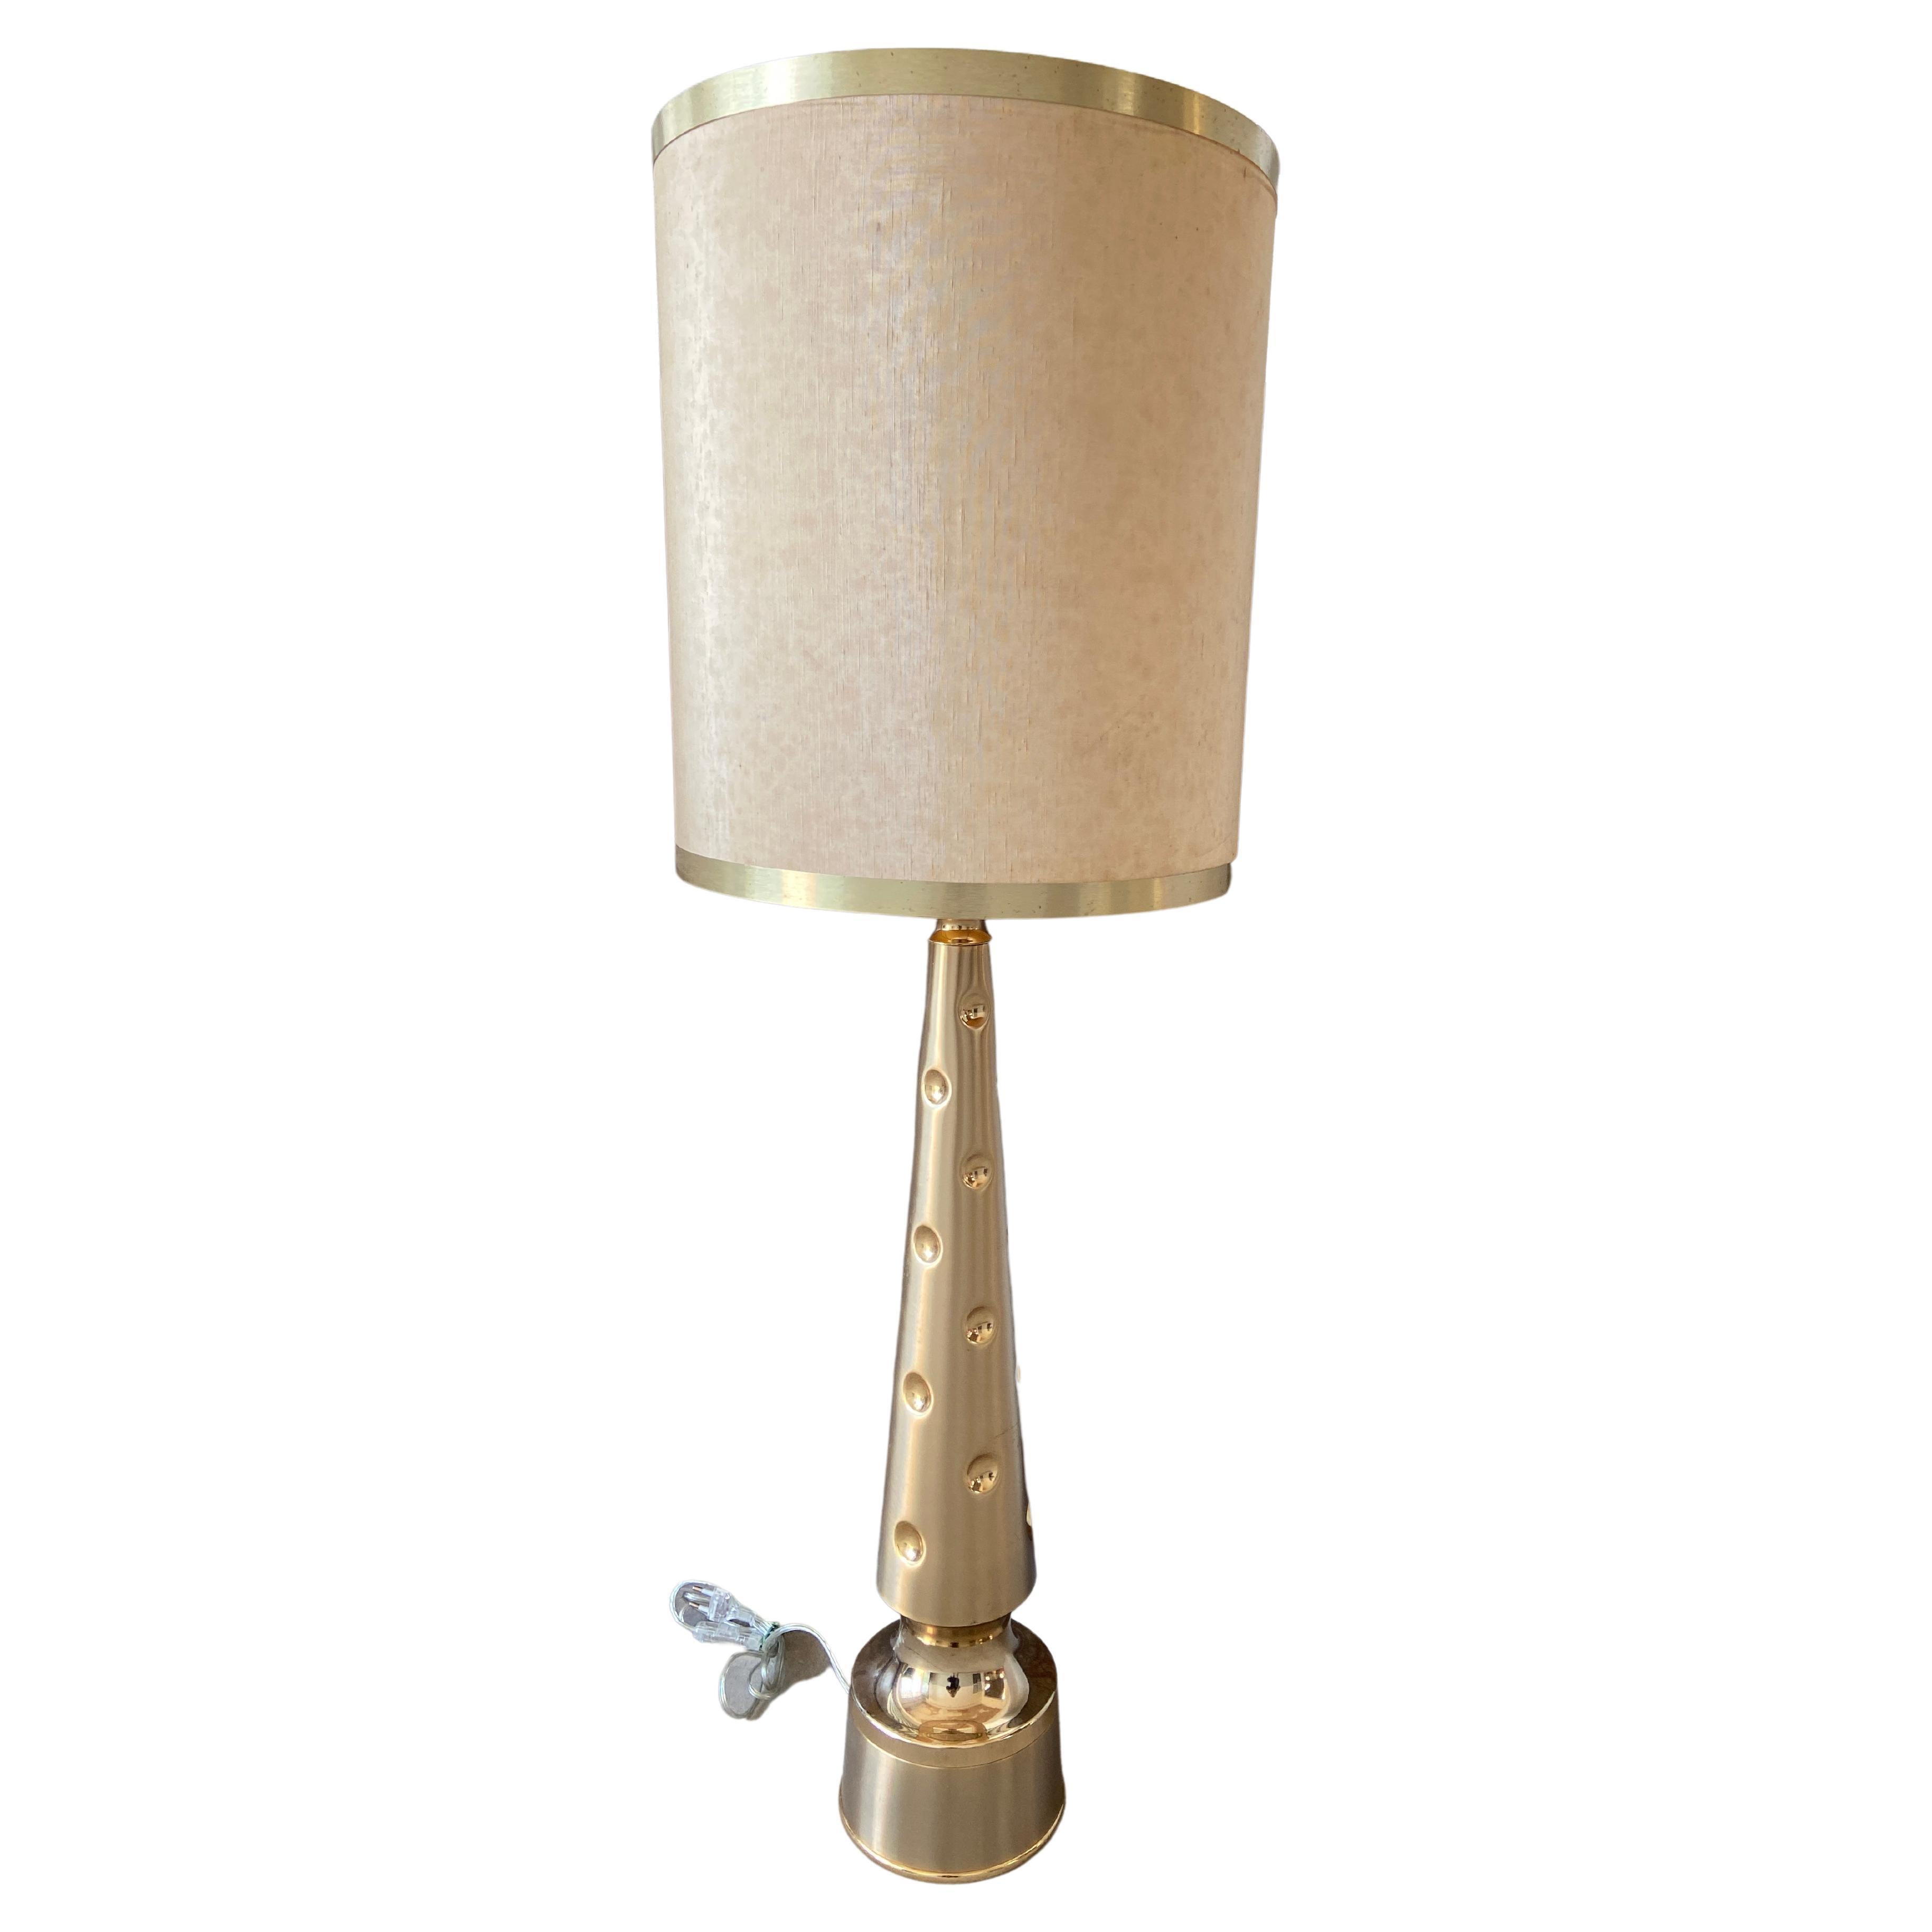 Mid-Century Modern Italian Gilt Metal Table Lamp with Original Lampshade, 1970s